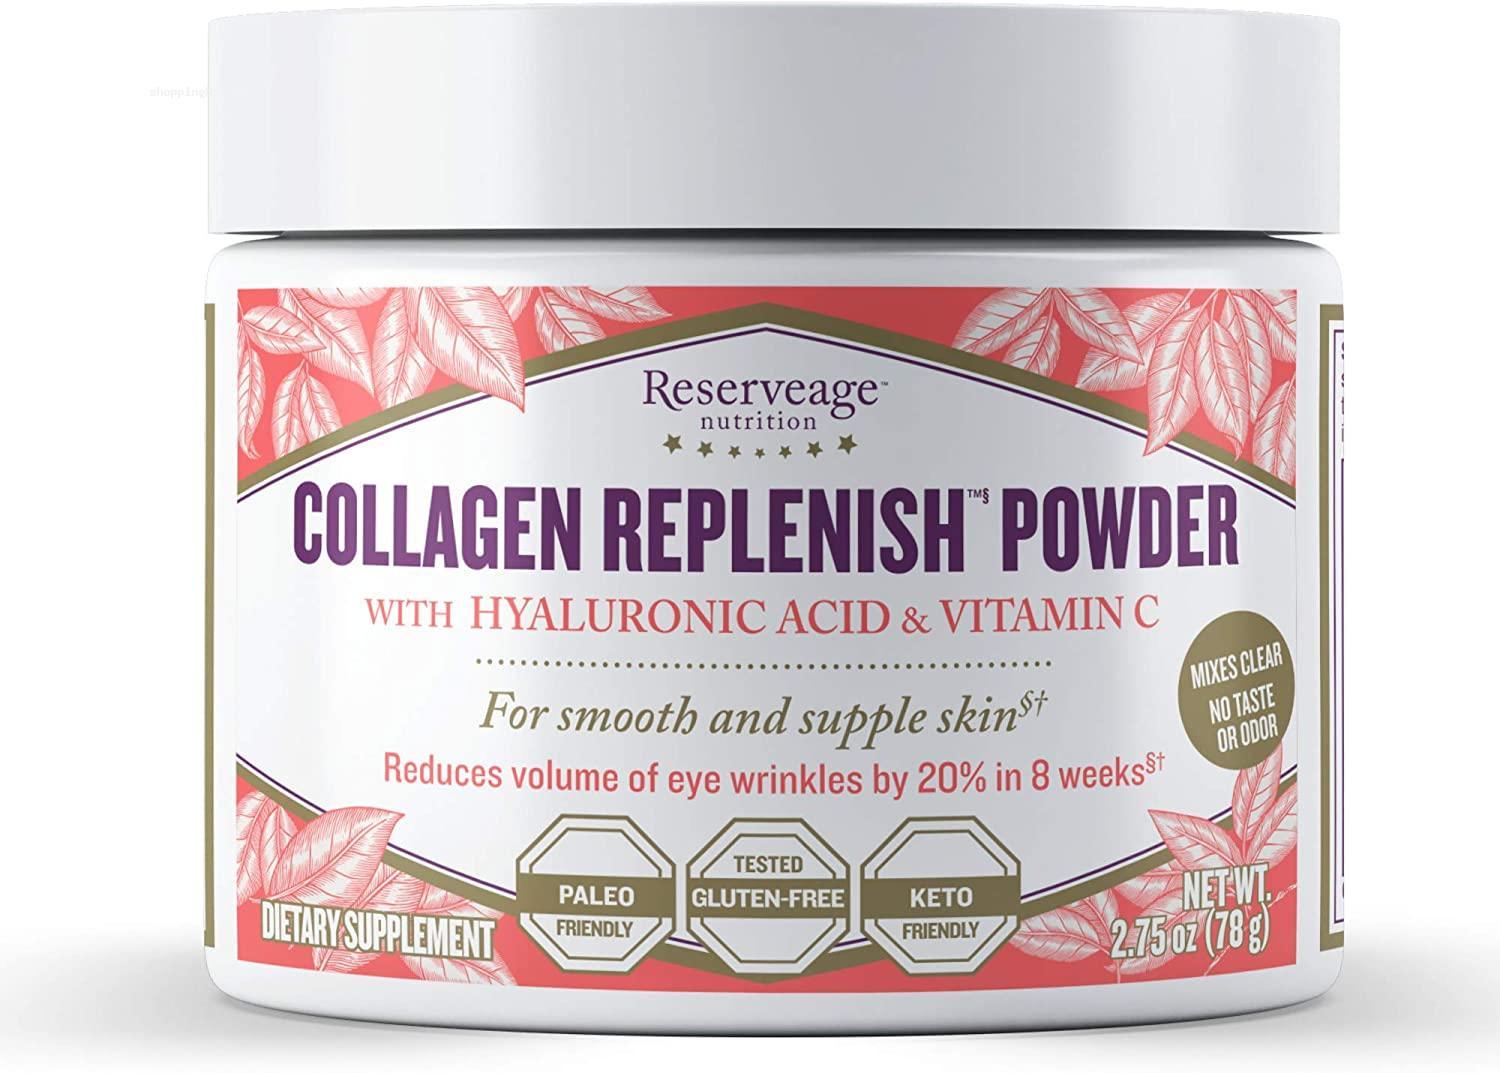 Reserveage Collagen Replenish Powder Supplement 2.75 oz (30 servings)